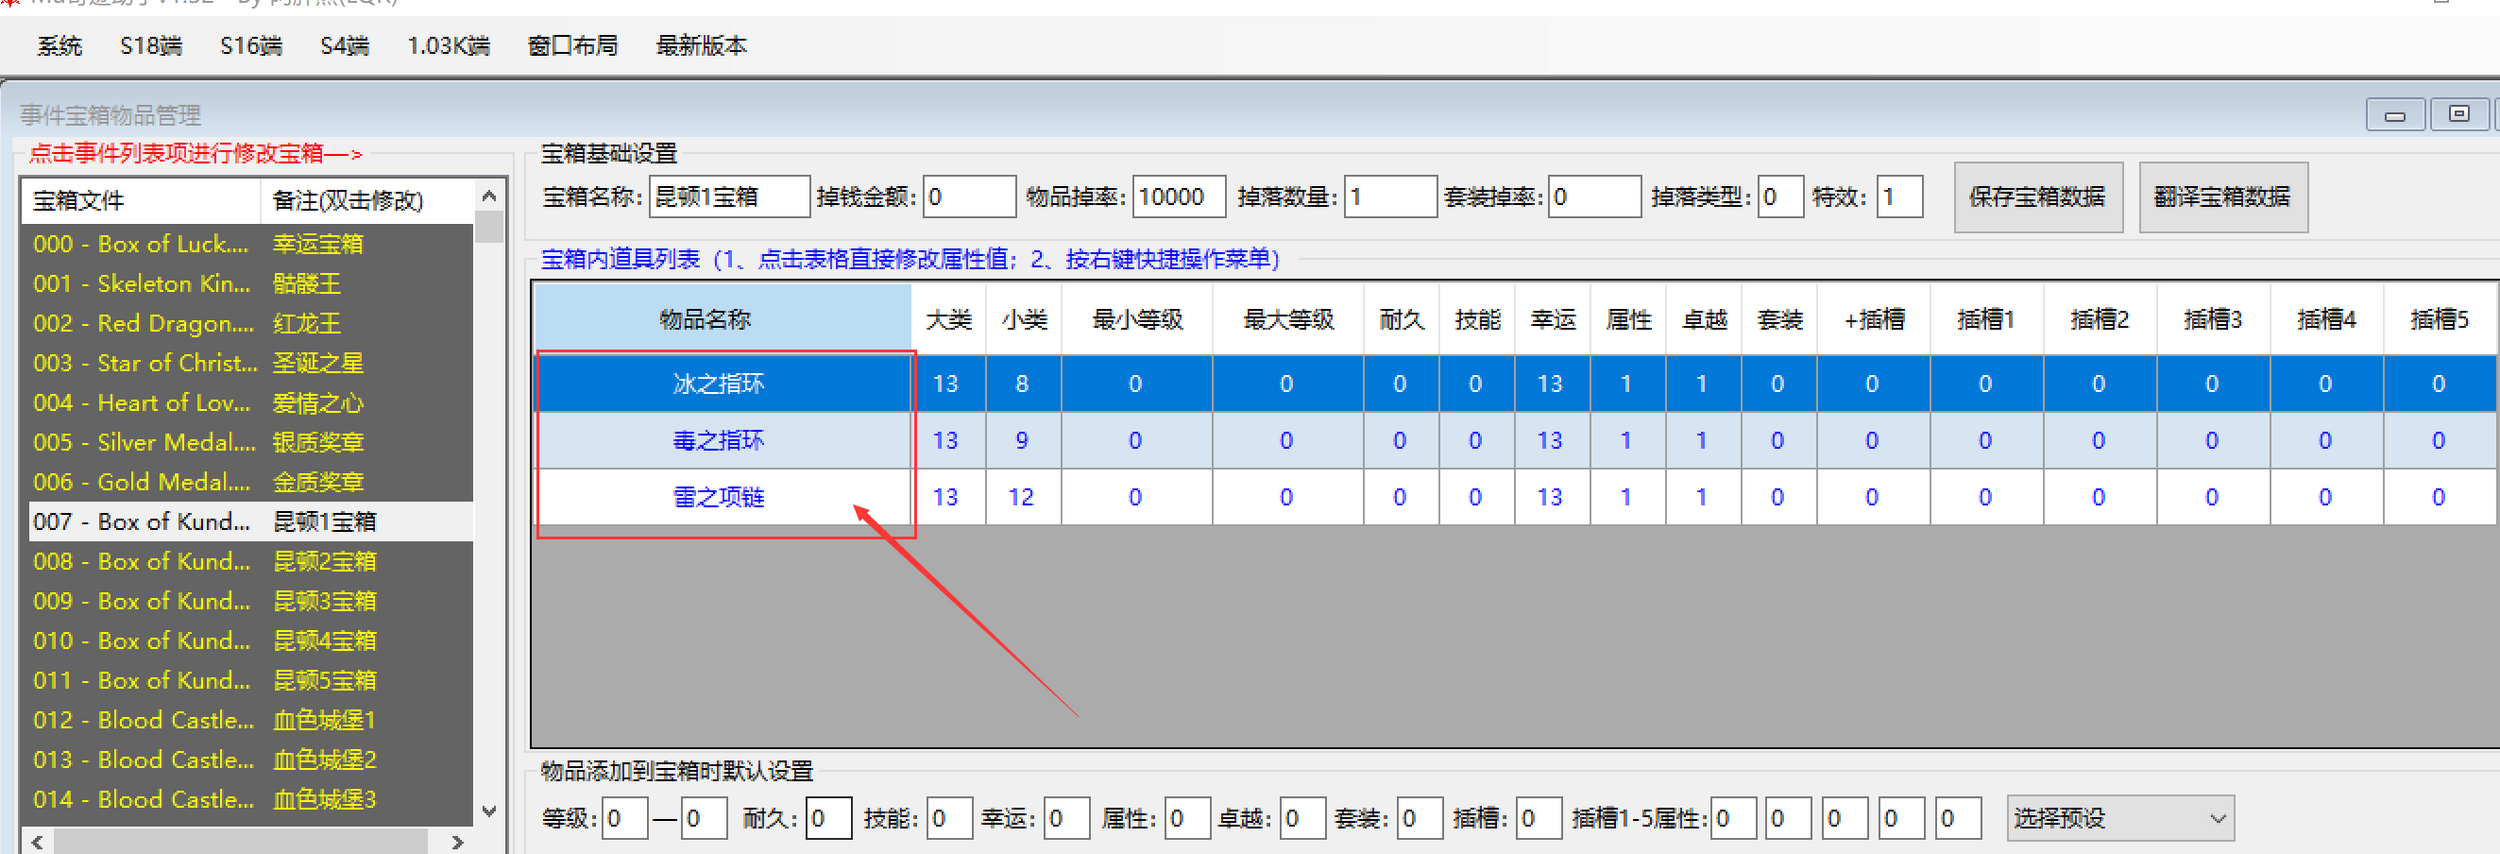 {191777CD-4056-4c47-8E3C-8BC0D38CDE8D} - How to edit mu S18-2-2 Box of Kundun 5.xml file? - RaGEZONE Forums